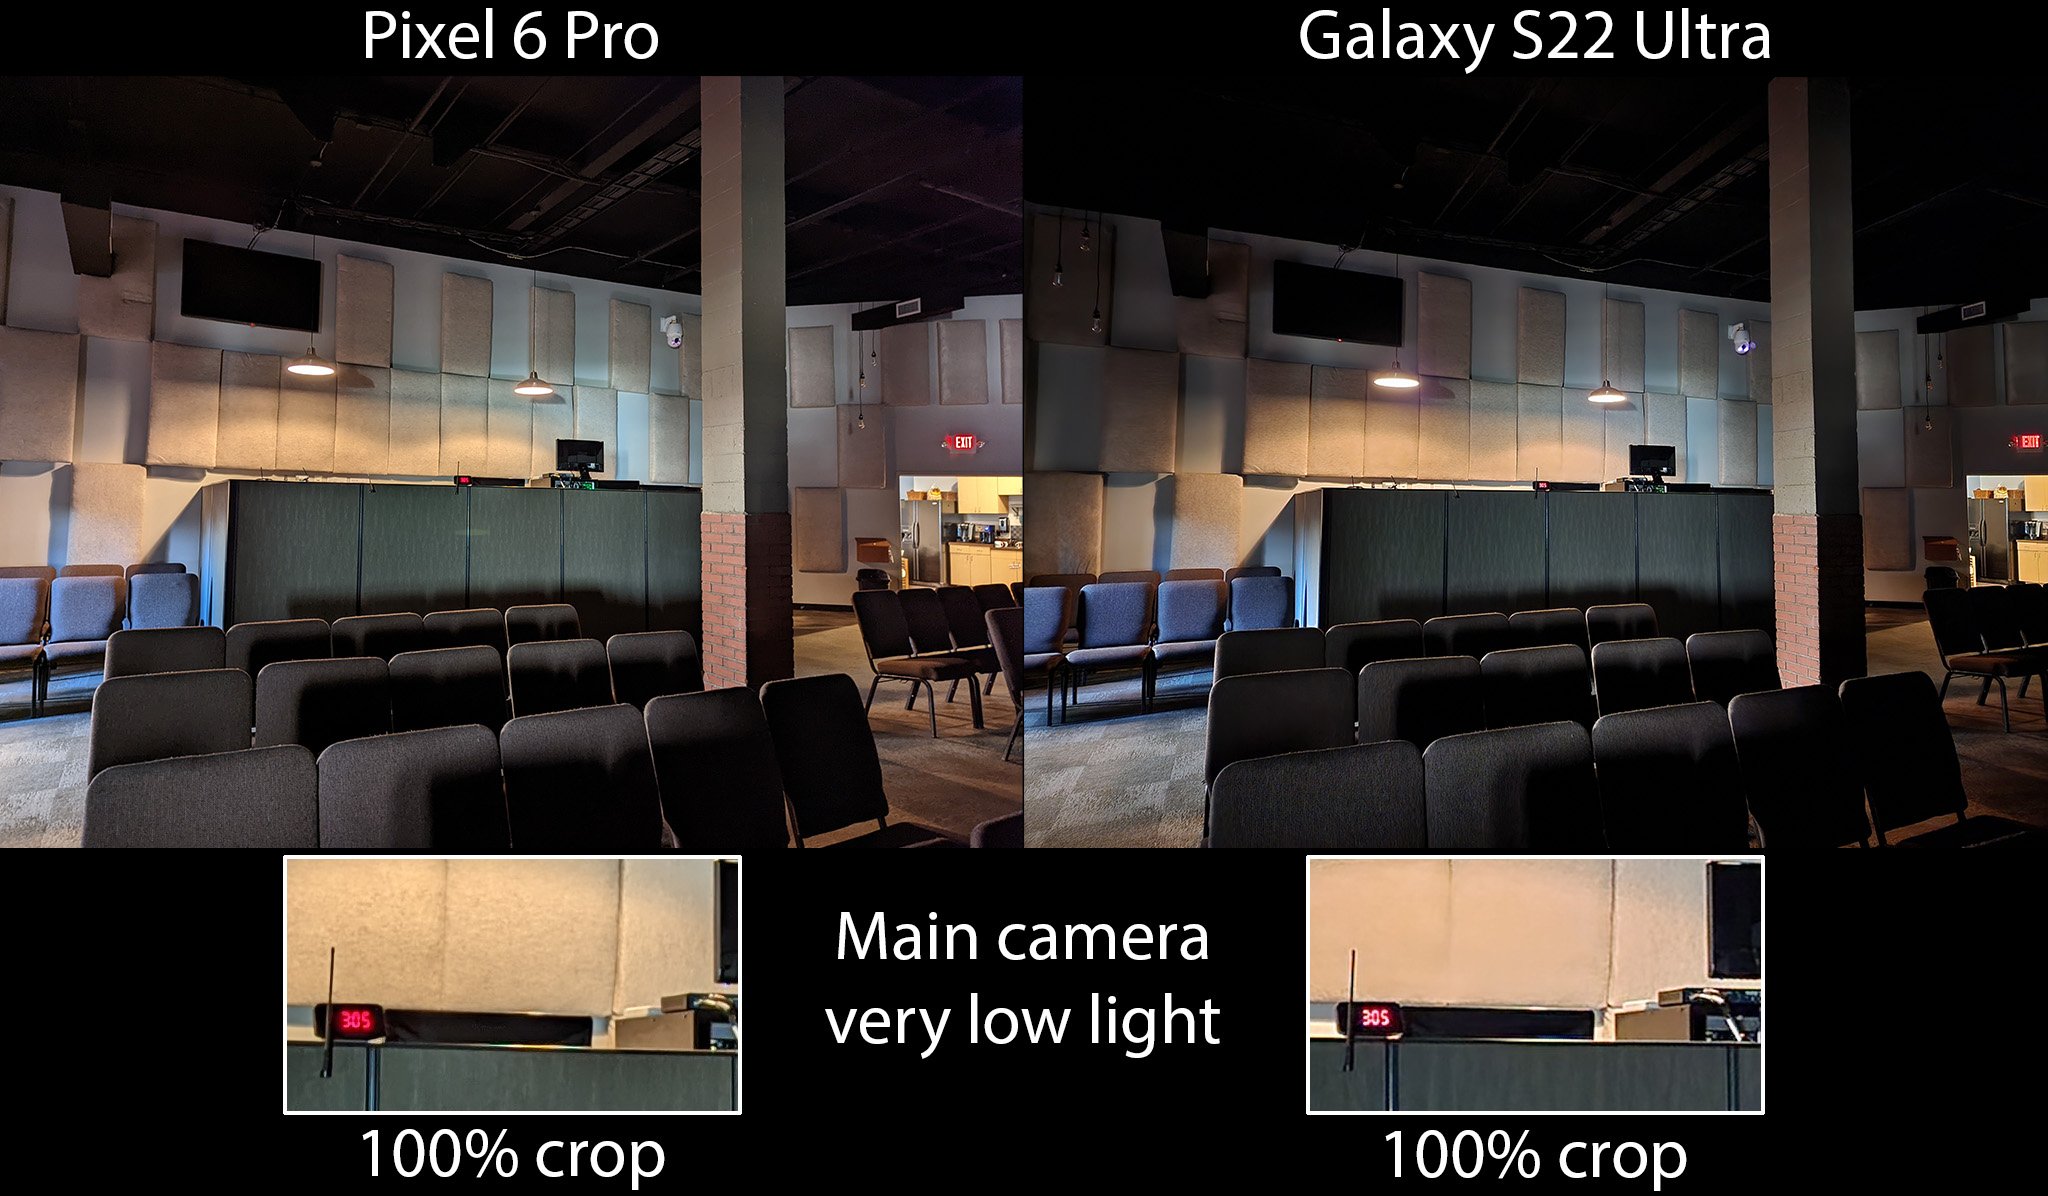 Galaxy S22 Ultra Vs Pixel 6 Pro Main Camera